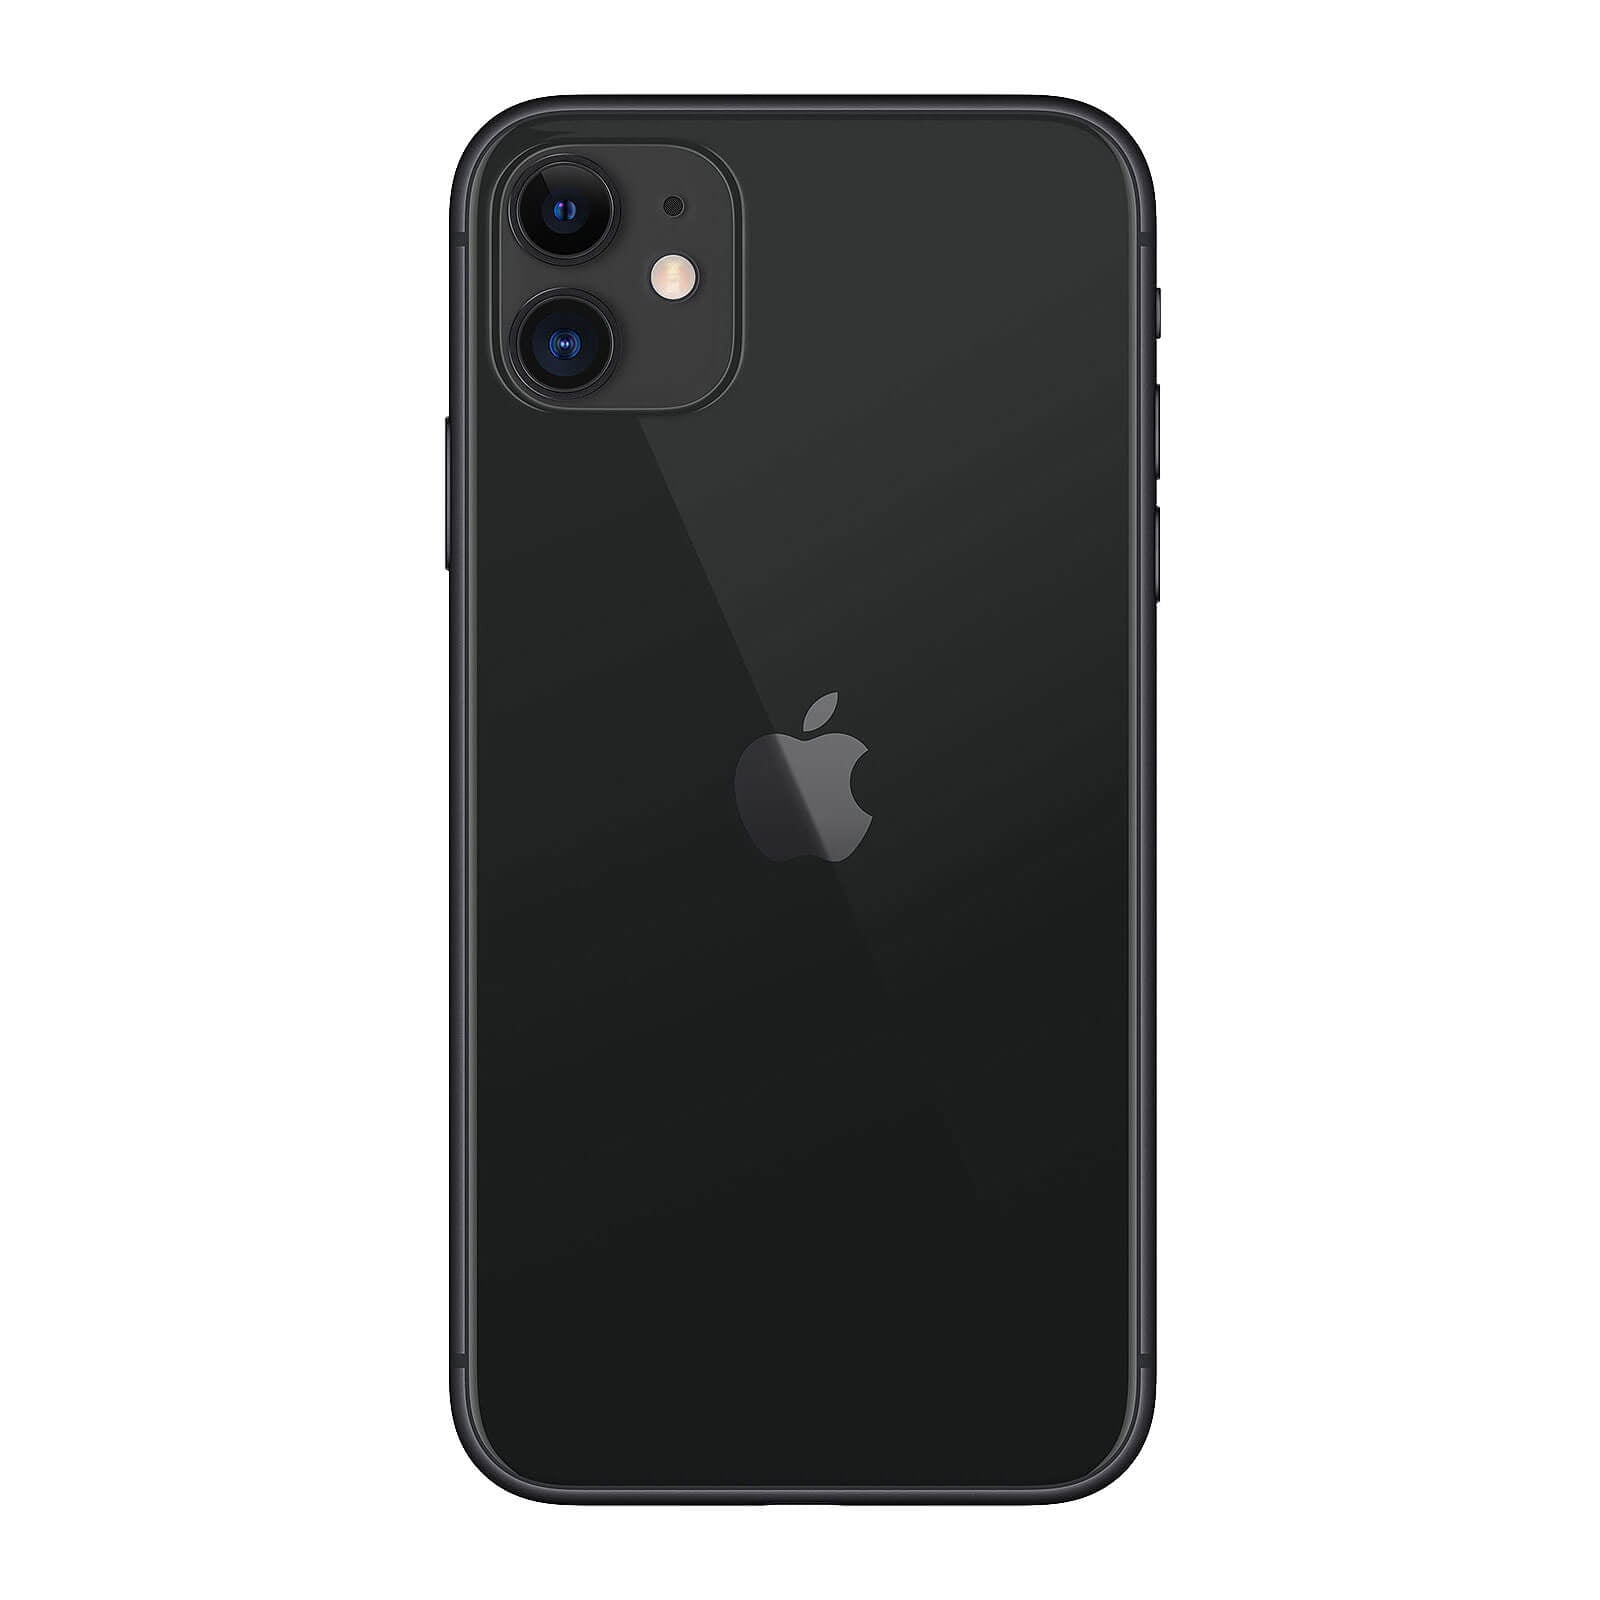 Apple iPhone 11 128GB Black Good - T-Mobile